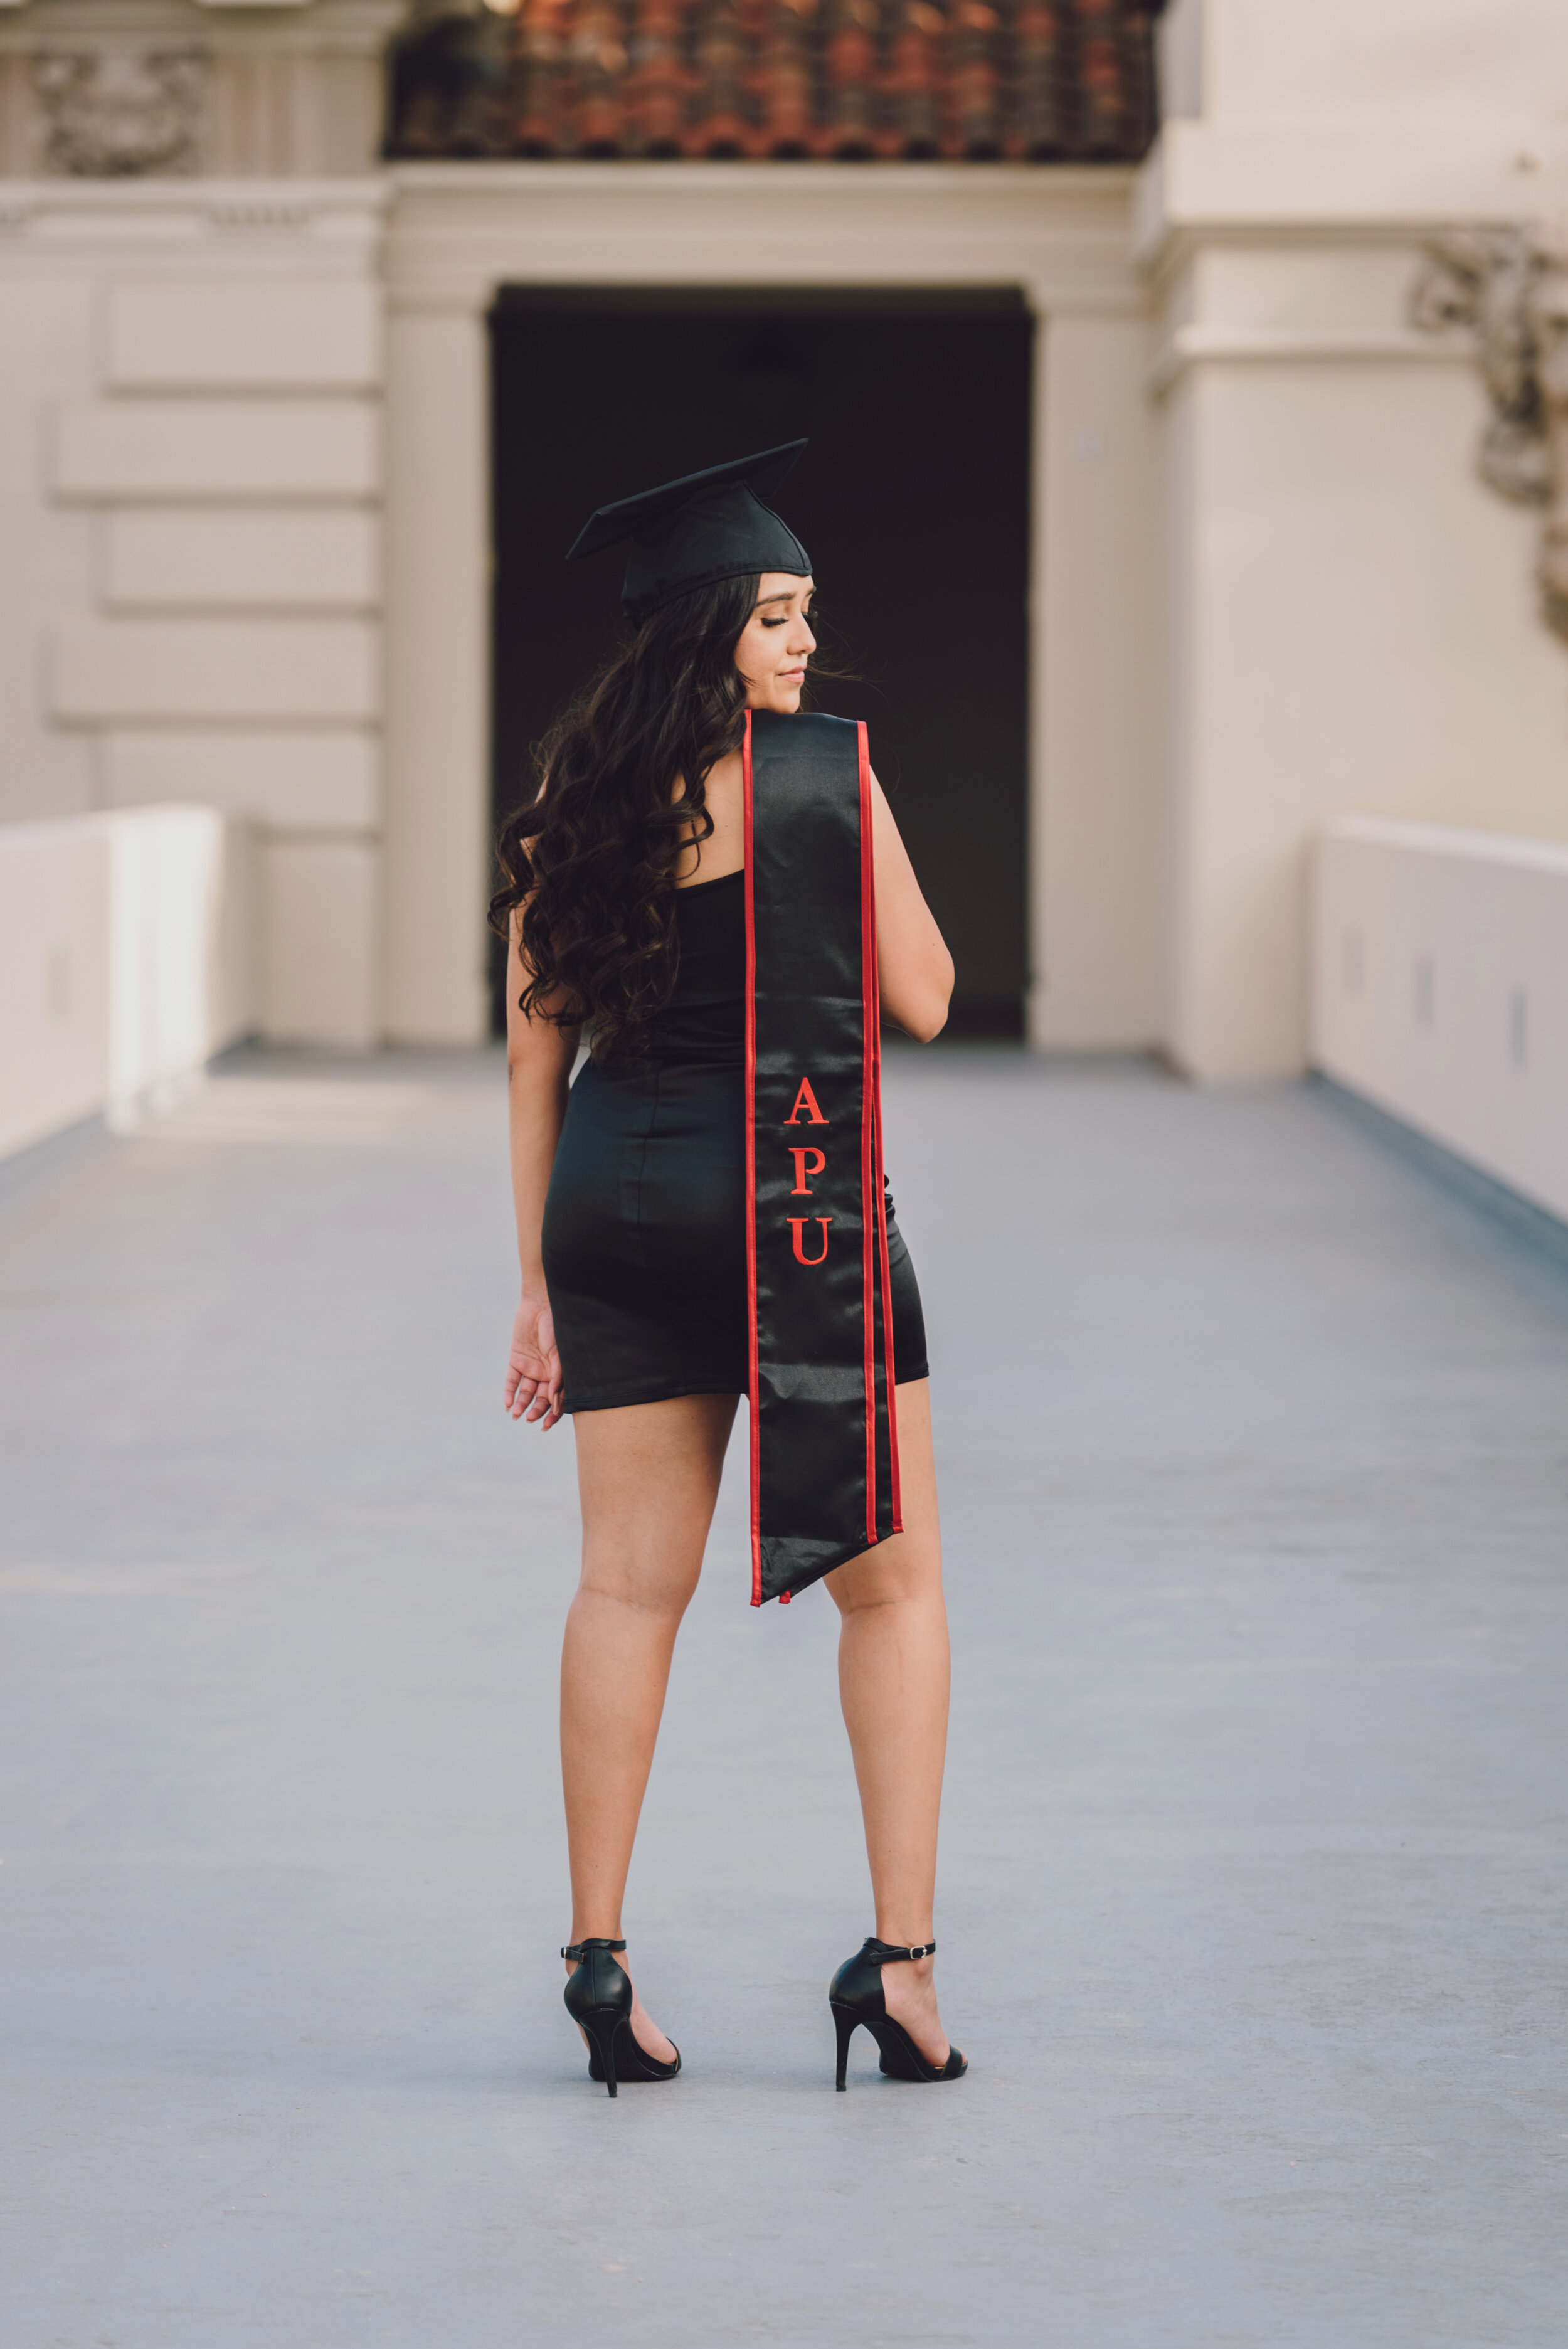 LosAngeles-Graduation-Portrait-Photographer-Pasadena-City-Hall-31.jpg